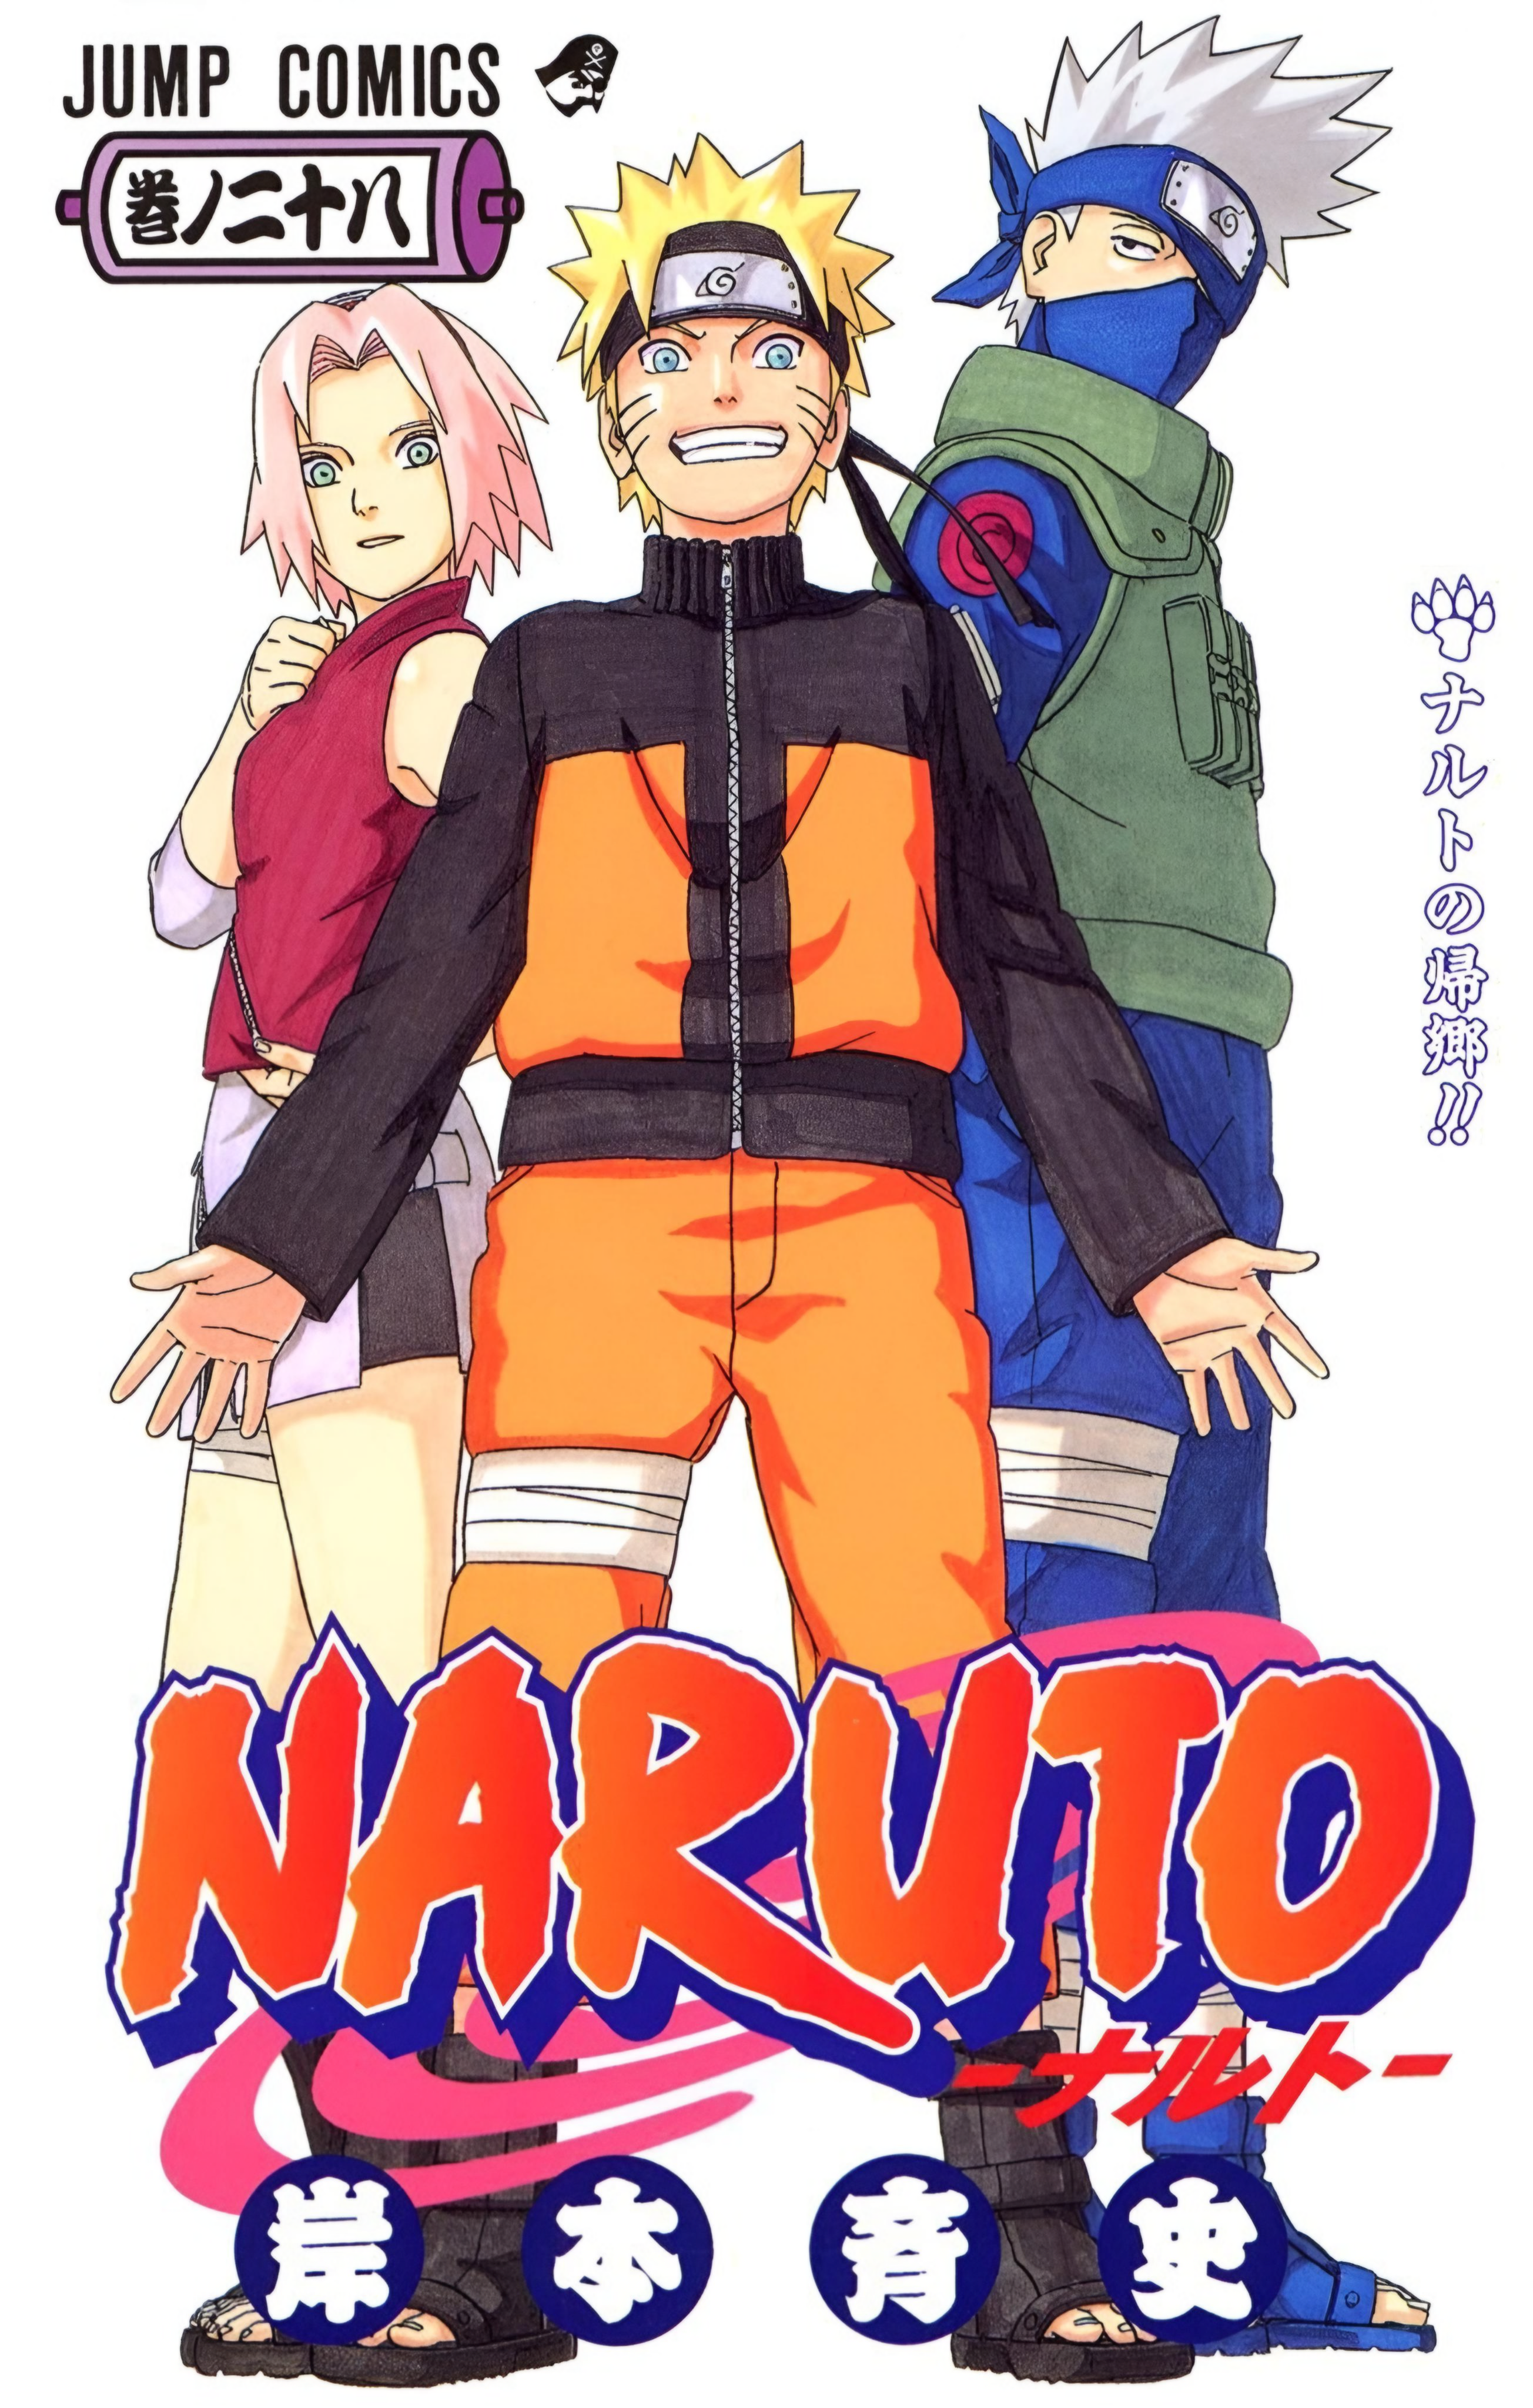 Livro Ilustrado Oficial Naruto Shippuden, Wiki Naruto